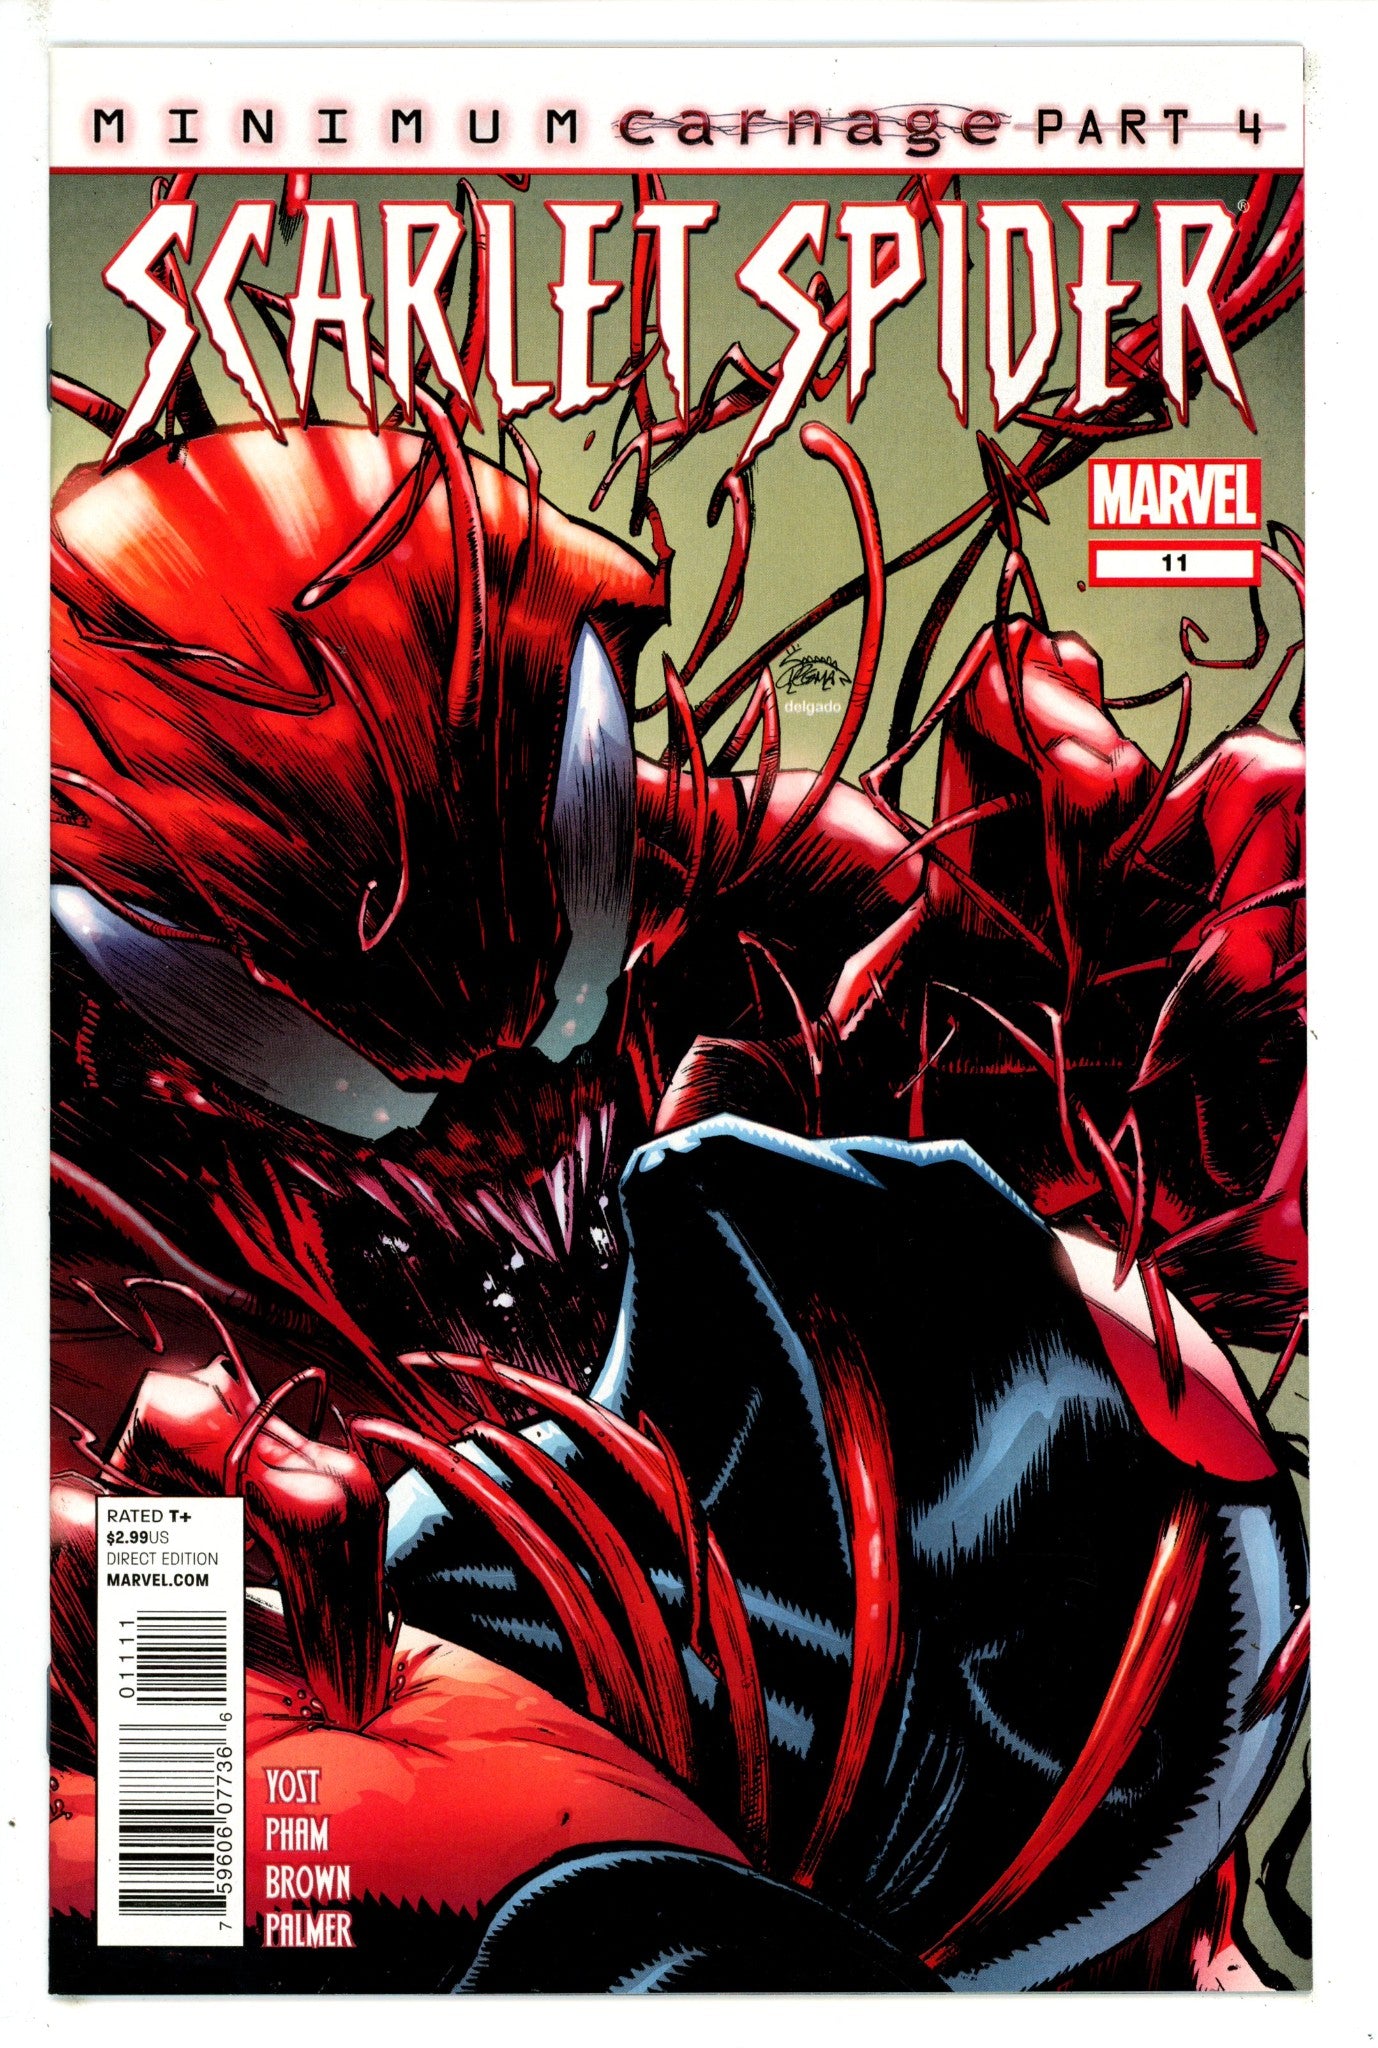 Scarlet Spider Vol 2 11 (2013)